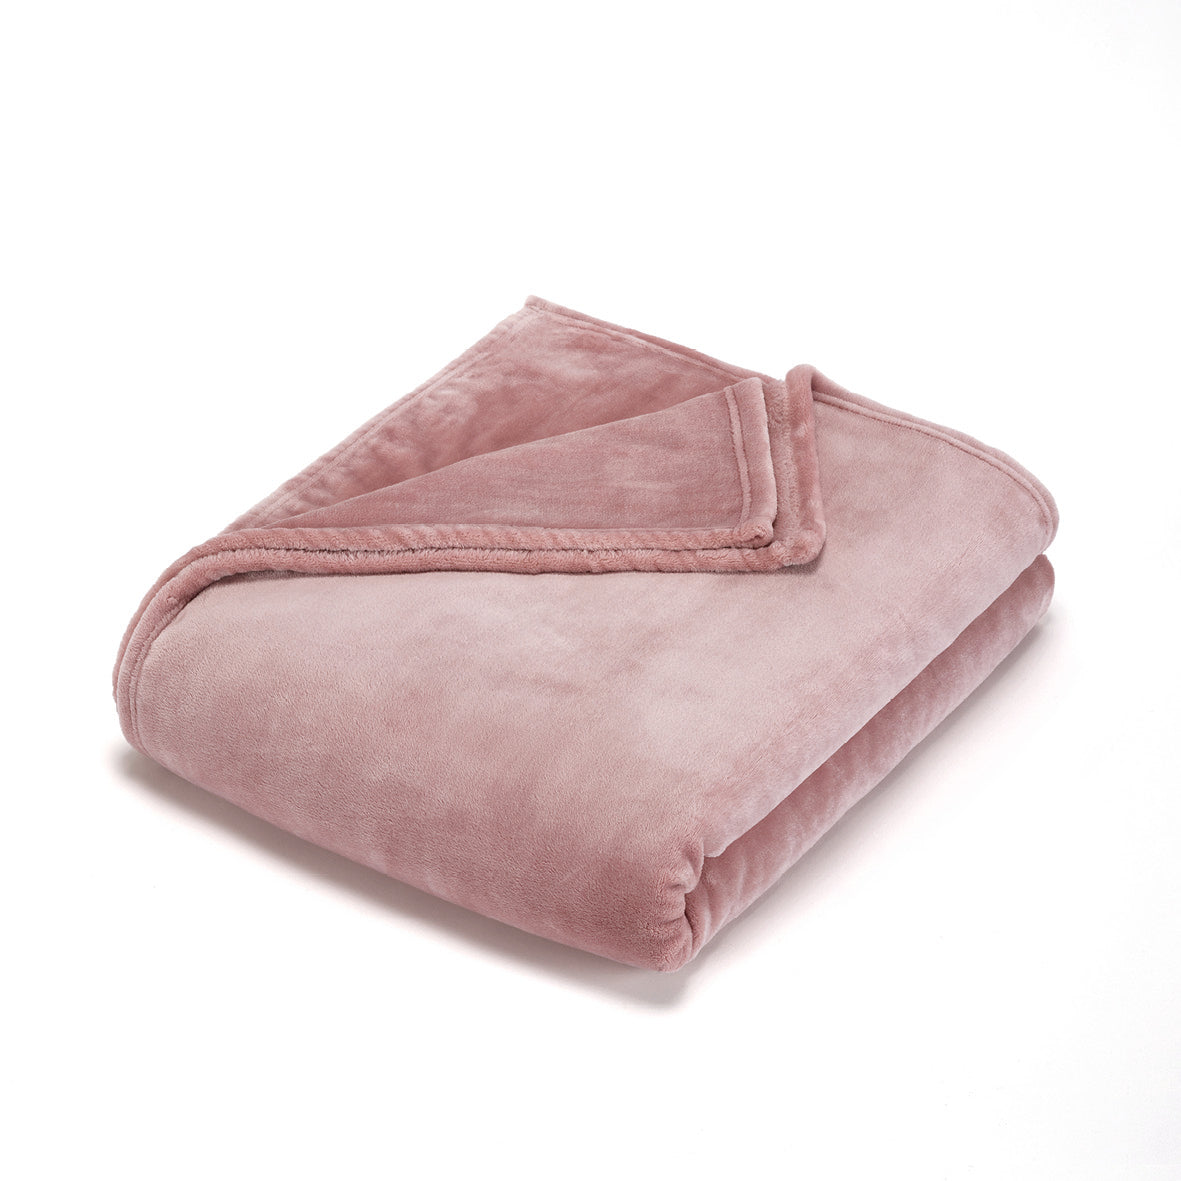 Fleece Light – Vipshopboutic pink plaid